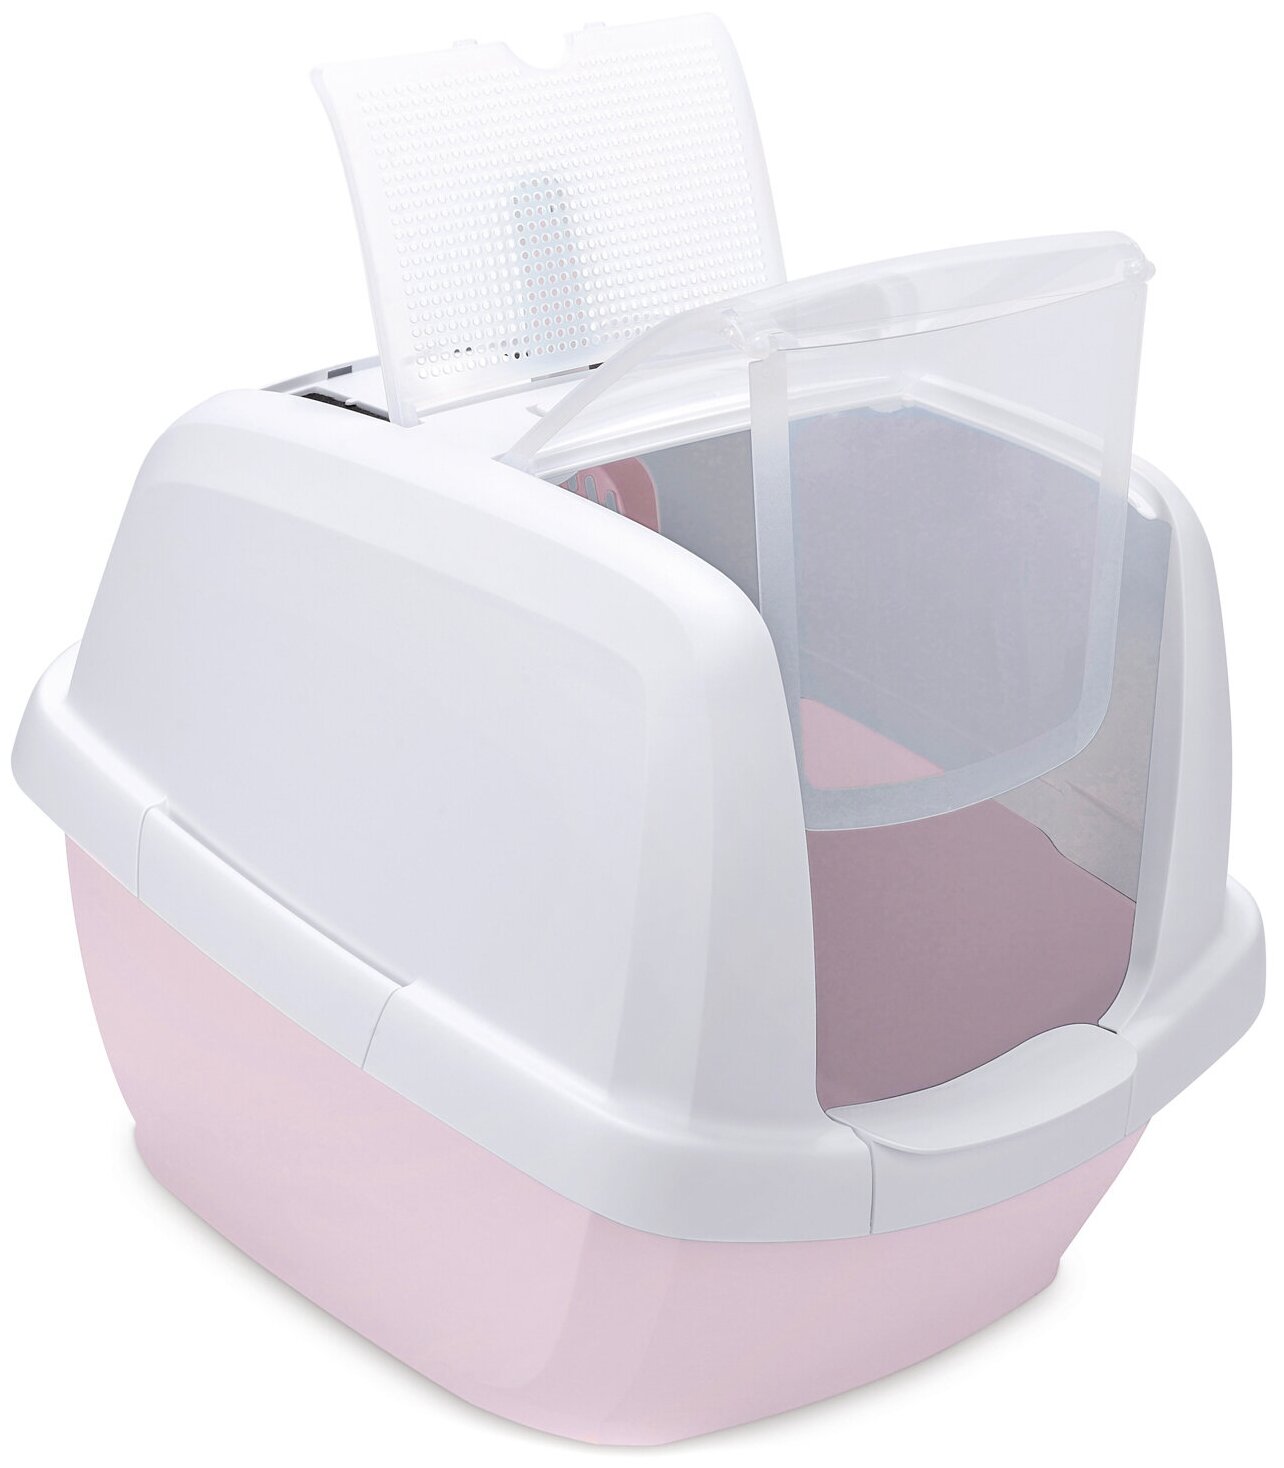 Био-туалет для кошек IMAC MADDY, белый/нежно-розовый,62х49,5х47,5 см